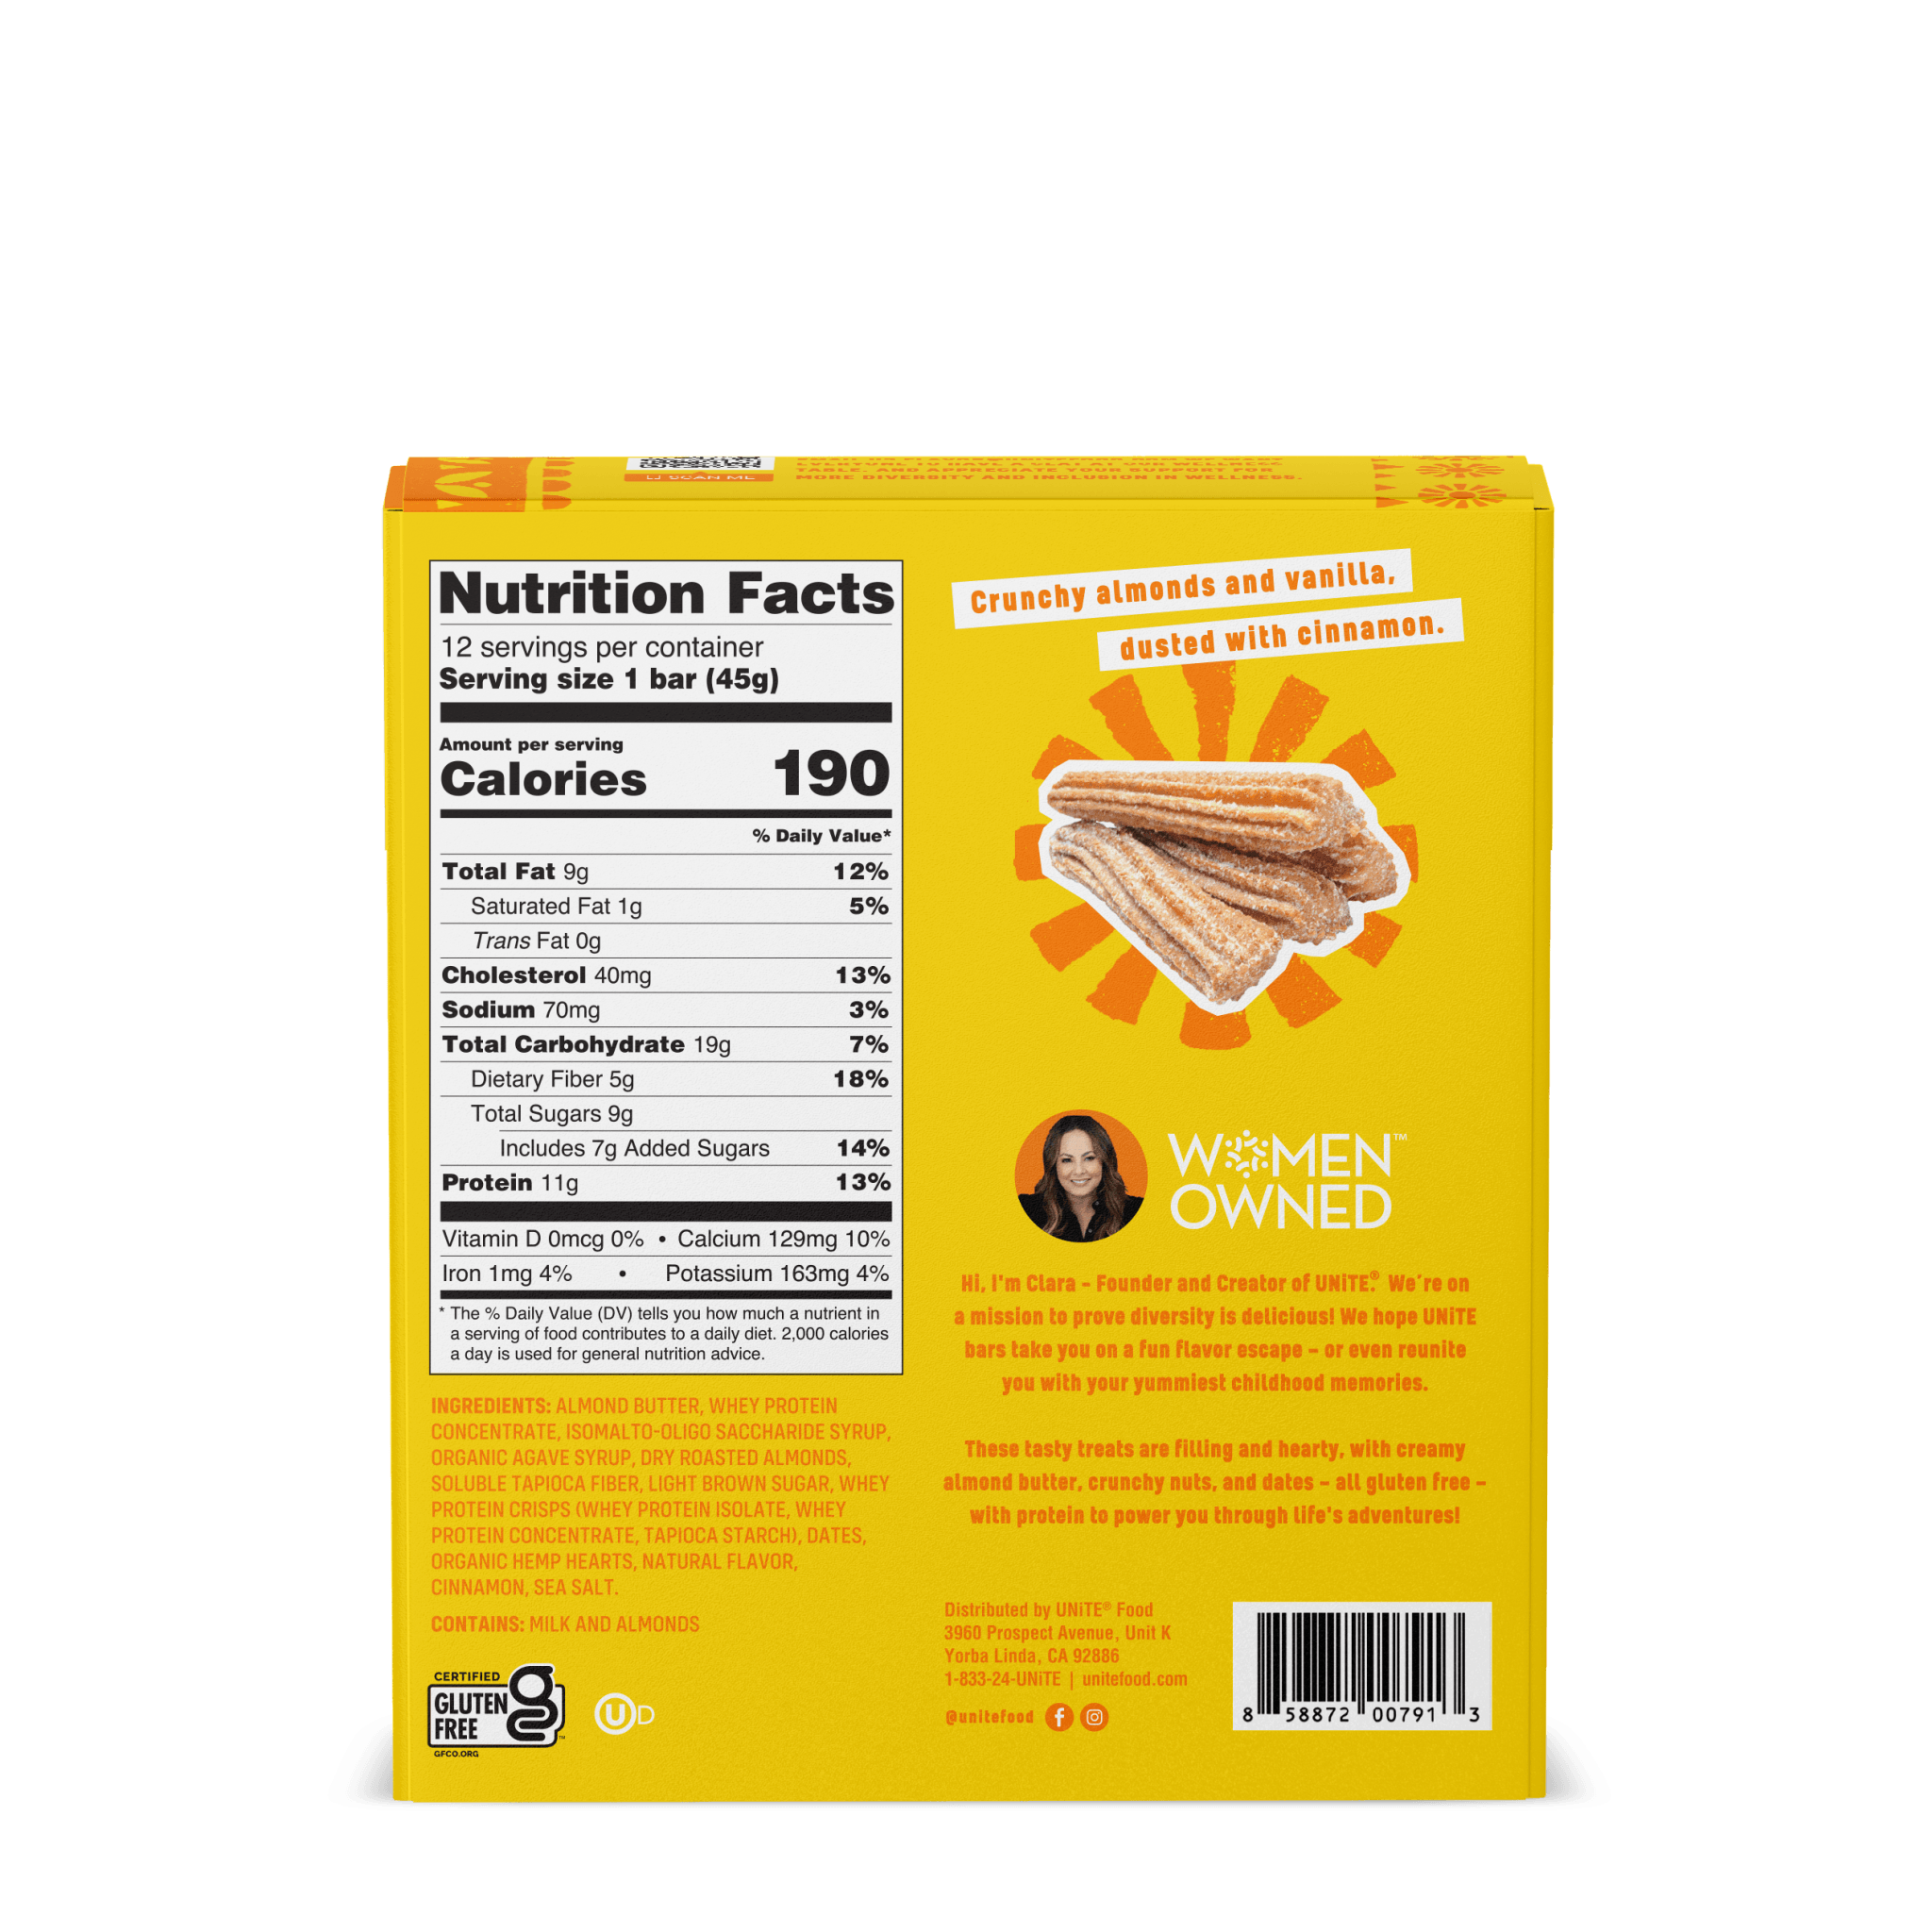 Churro Protein Bar - UNiTE Food - Consumerhaus